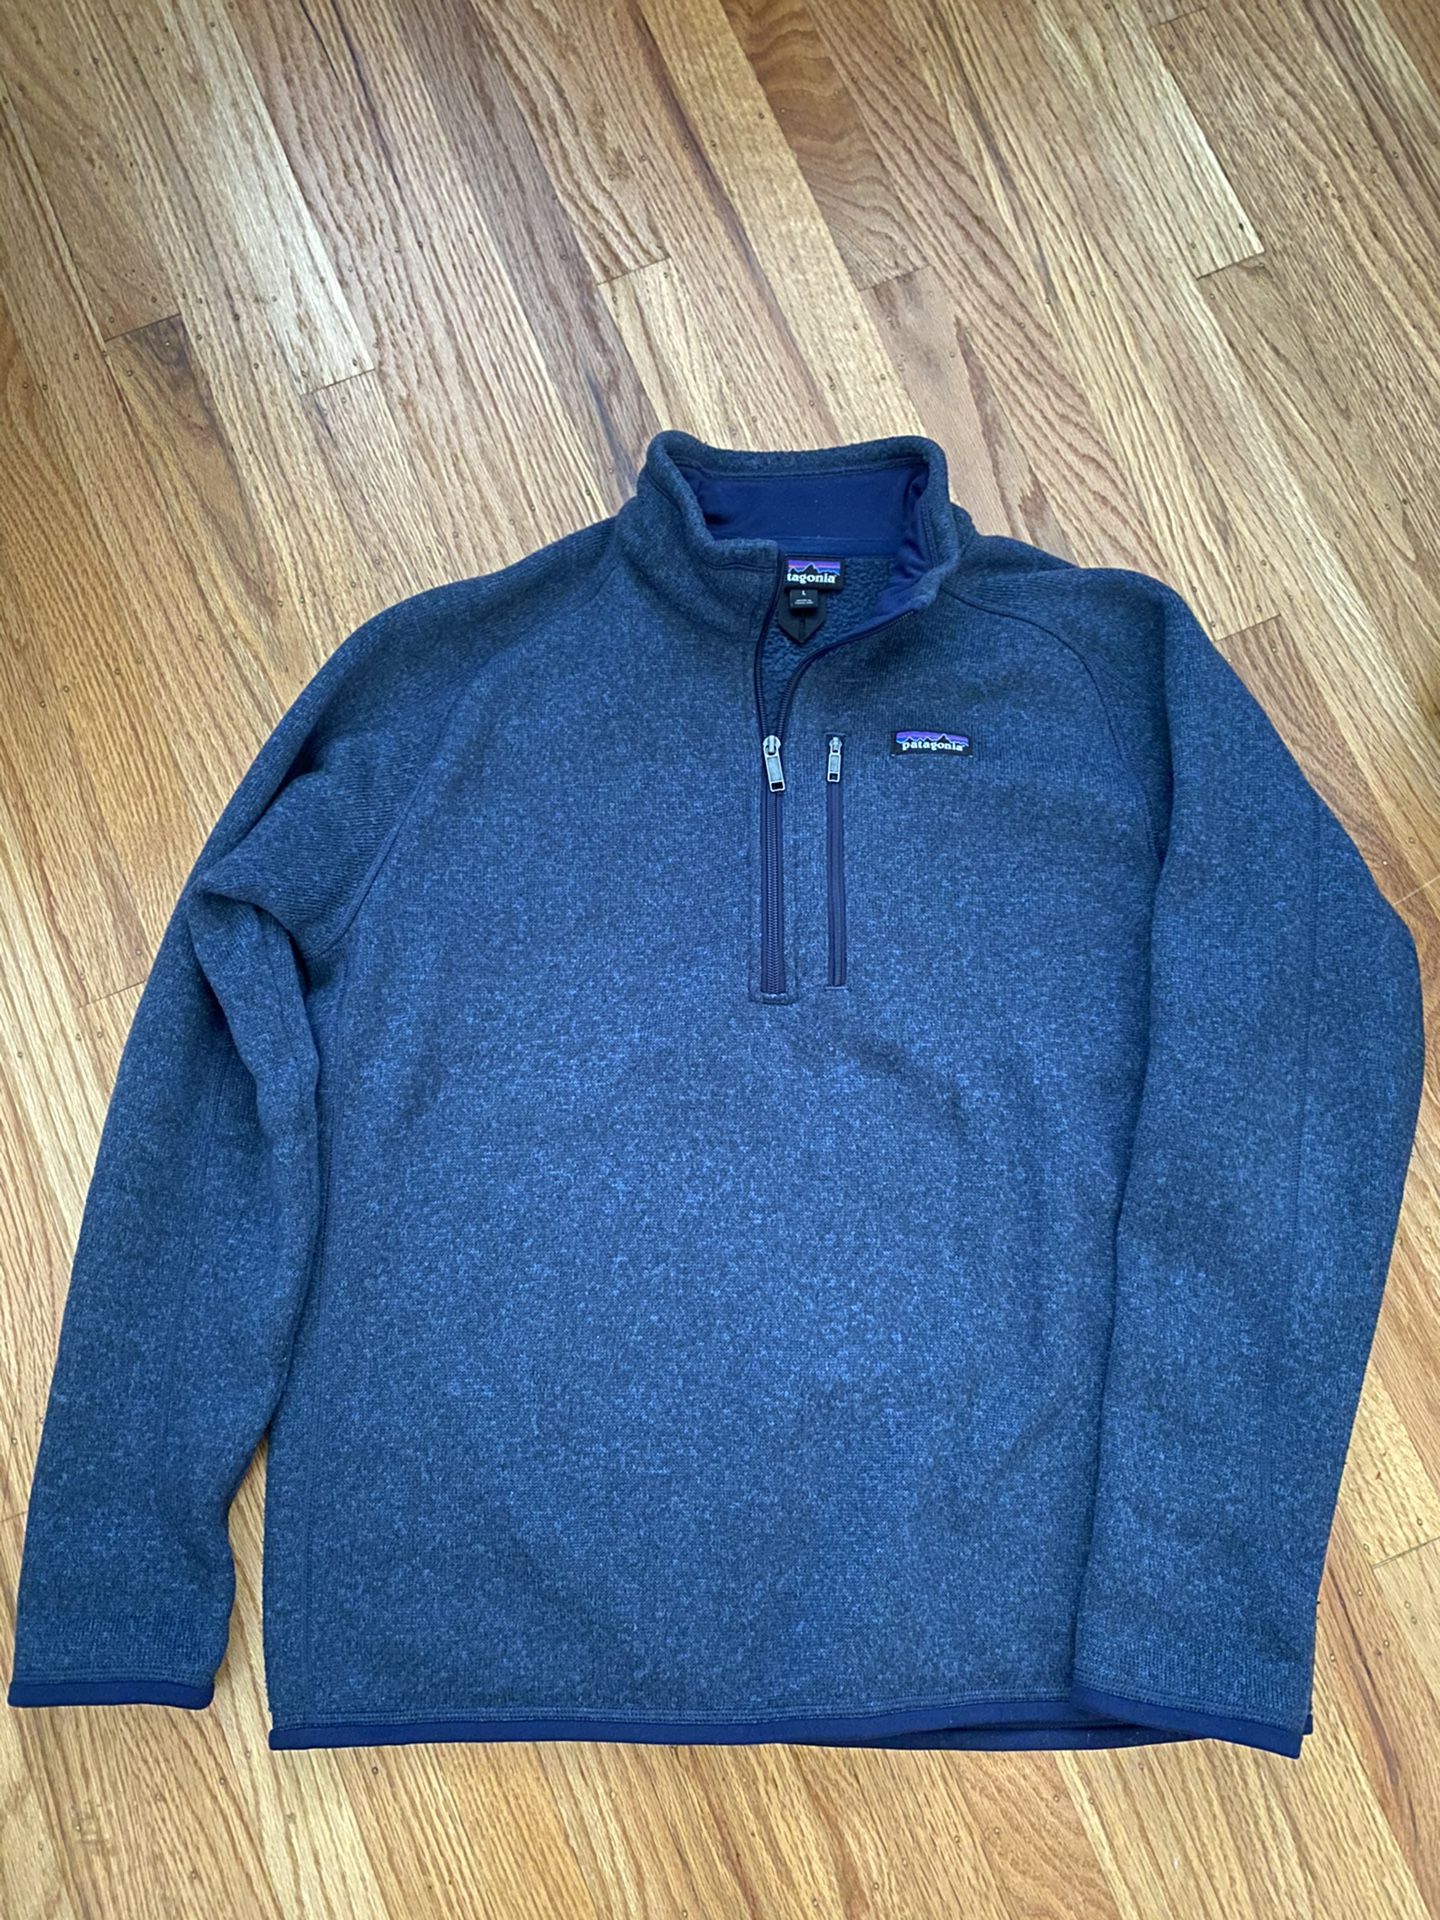 Patagonia Men’s Better Sweater 1/4 Zip LARGE